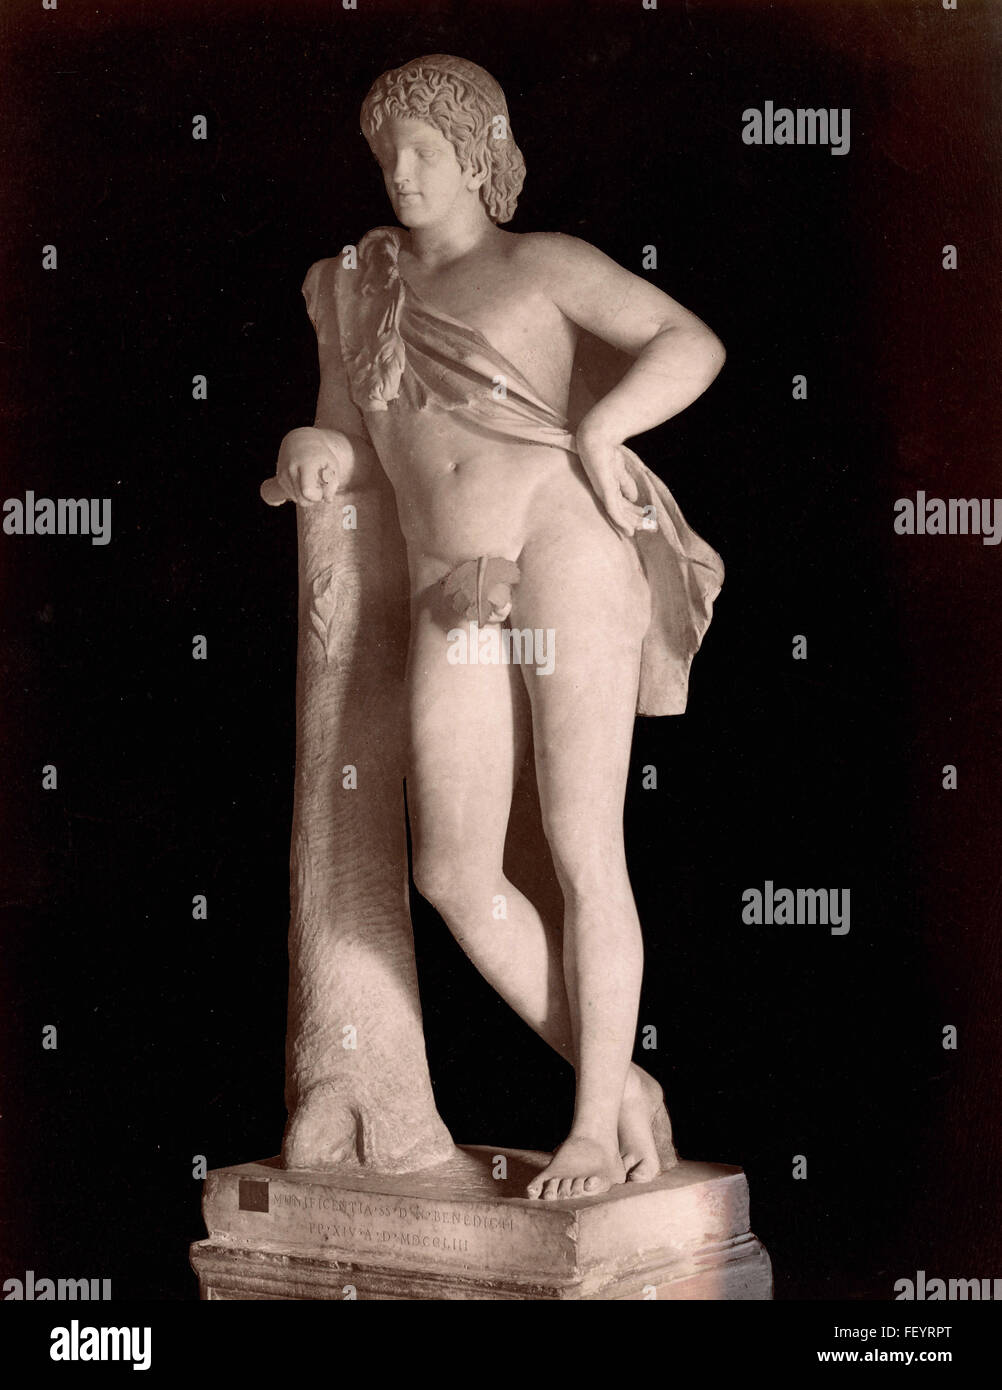 Faun de Praxiteles estatua griega Foto de stock